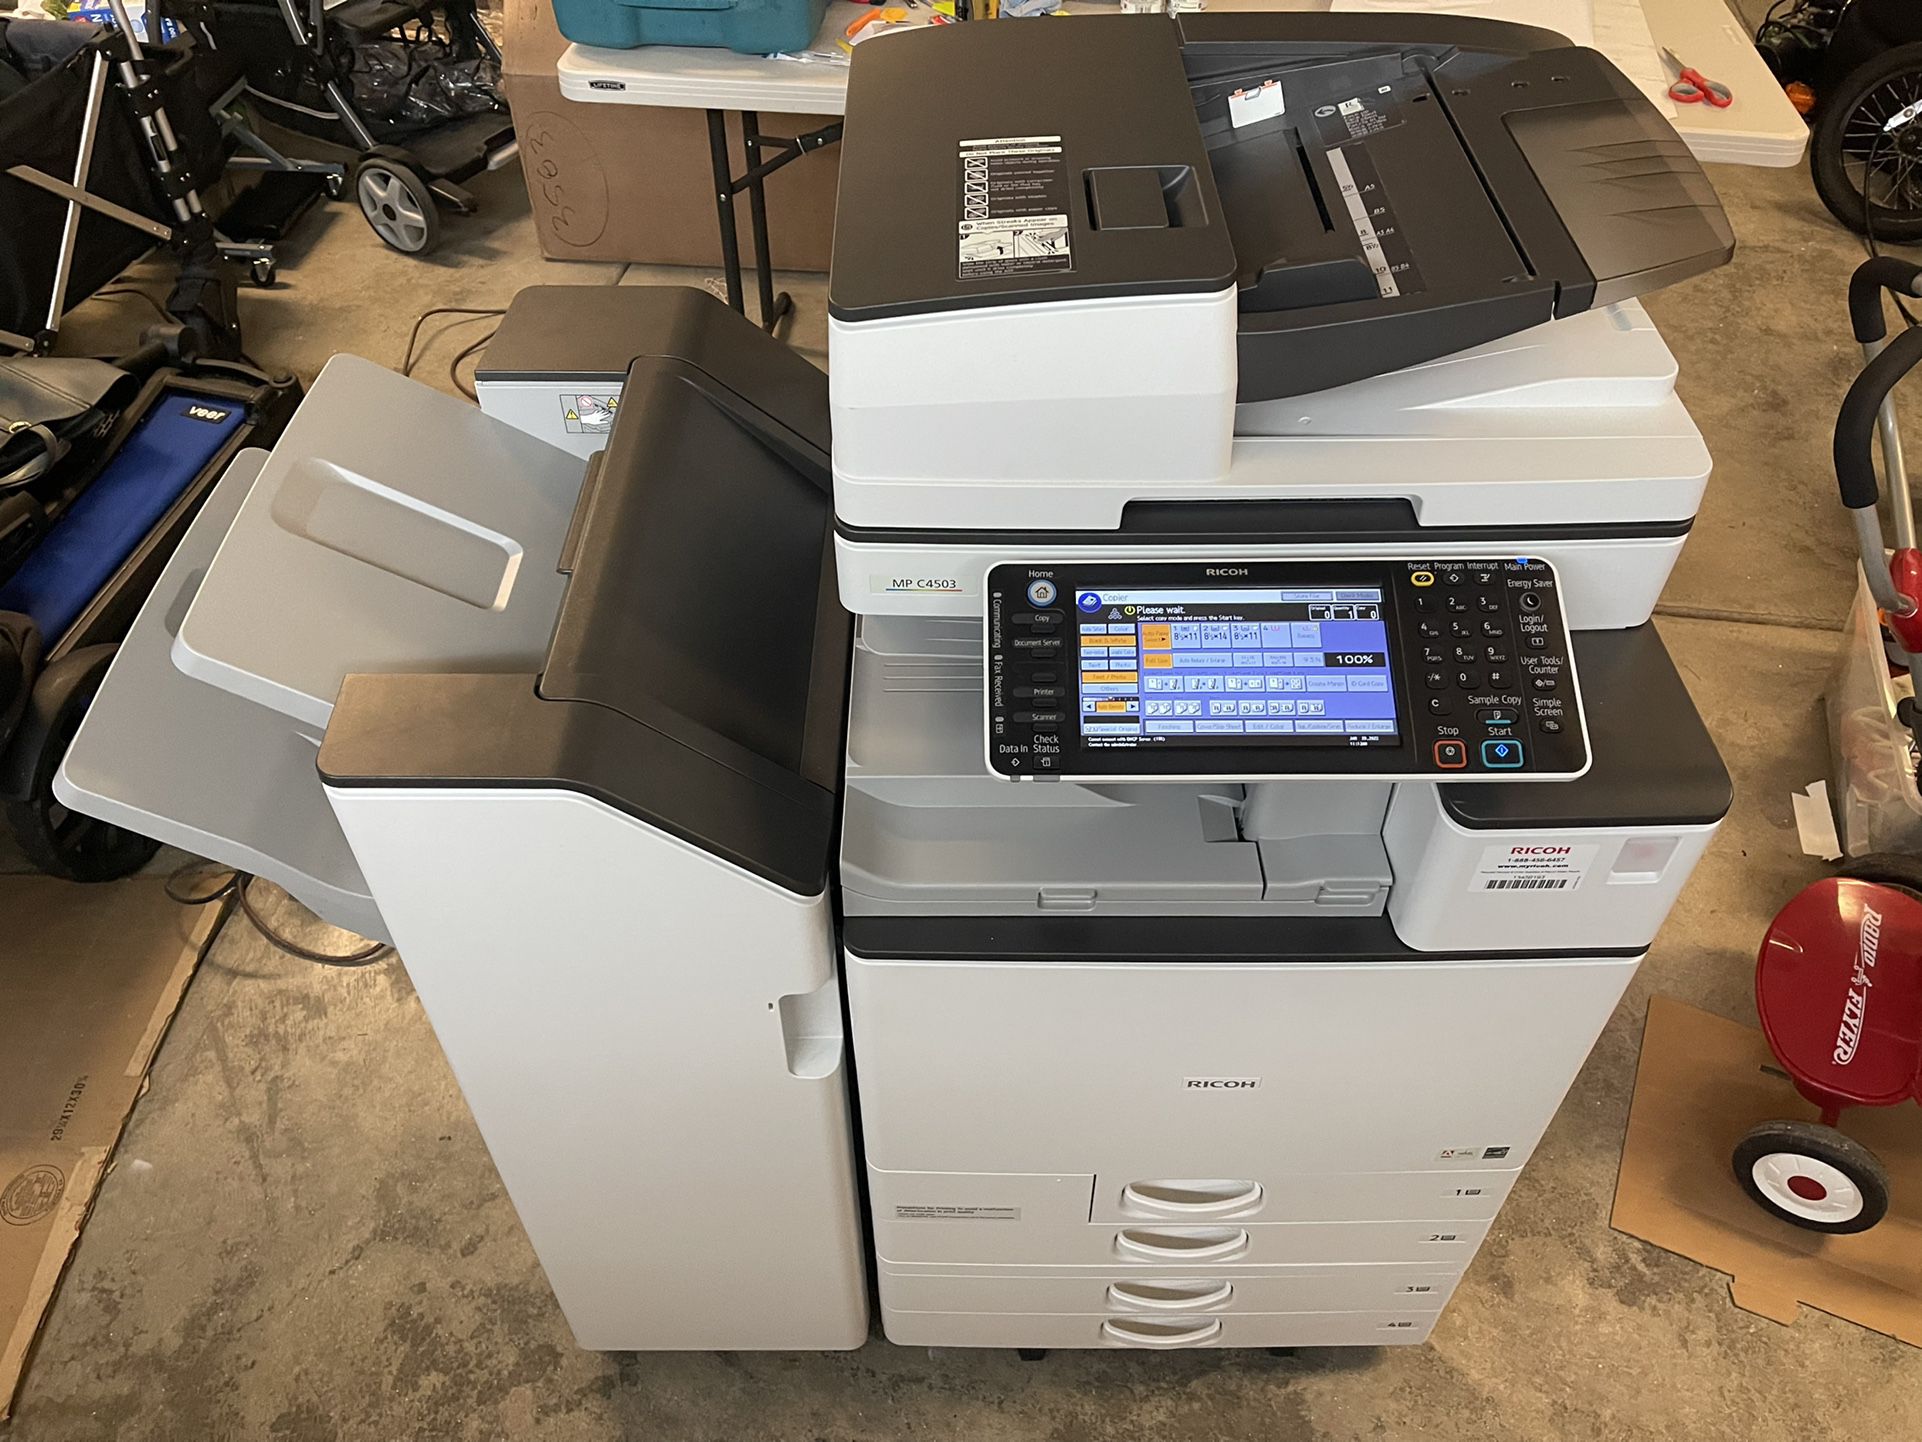 Professional MP c4503 printer